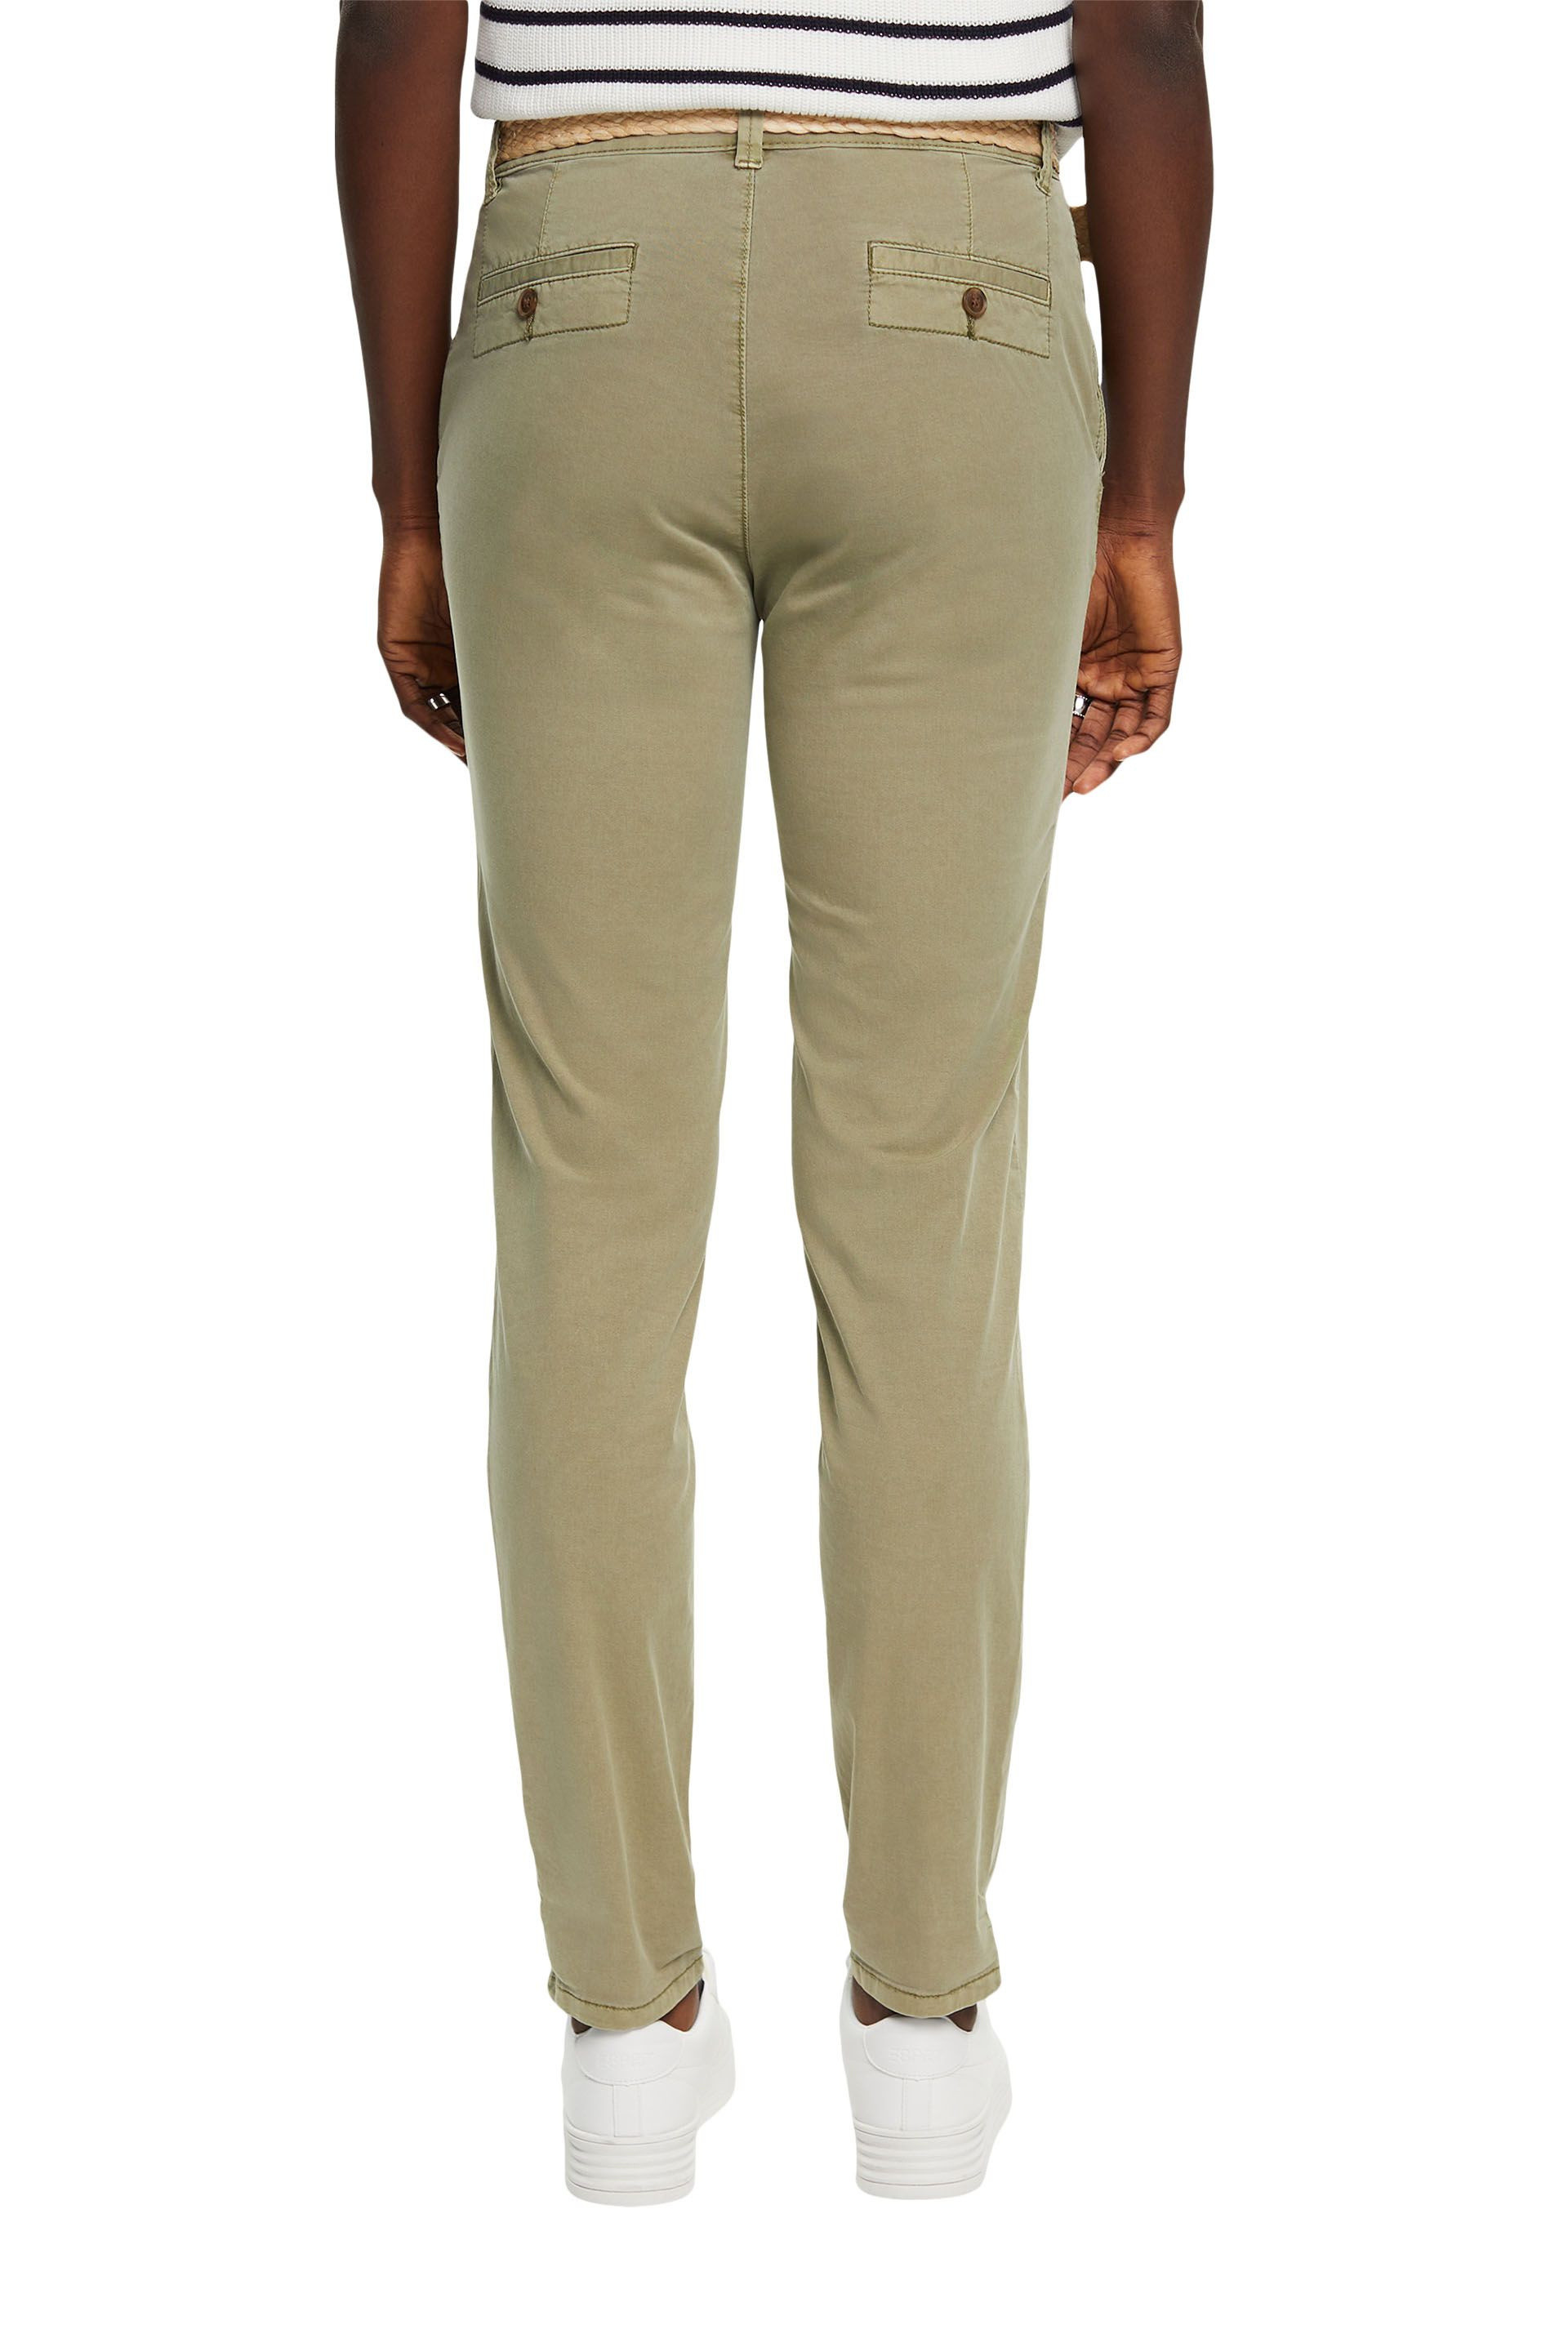 Esprit - Pantaloni chino cropped con cintura, Verde salvia, large image number 2